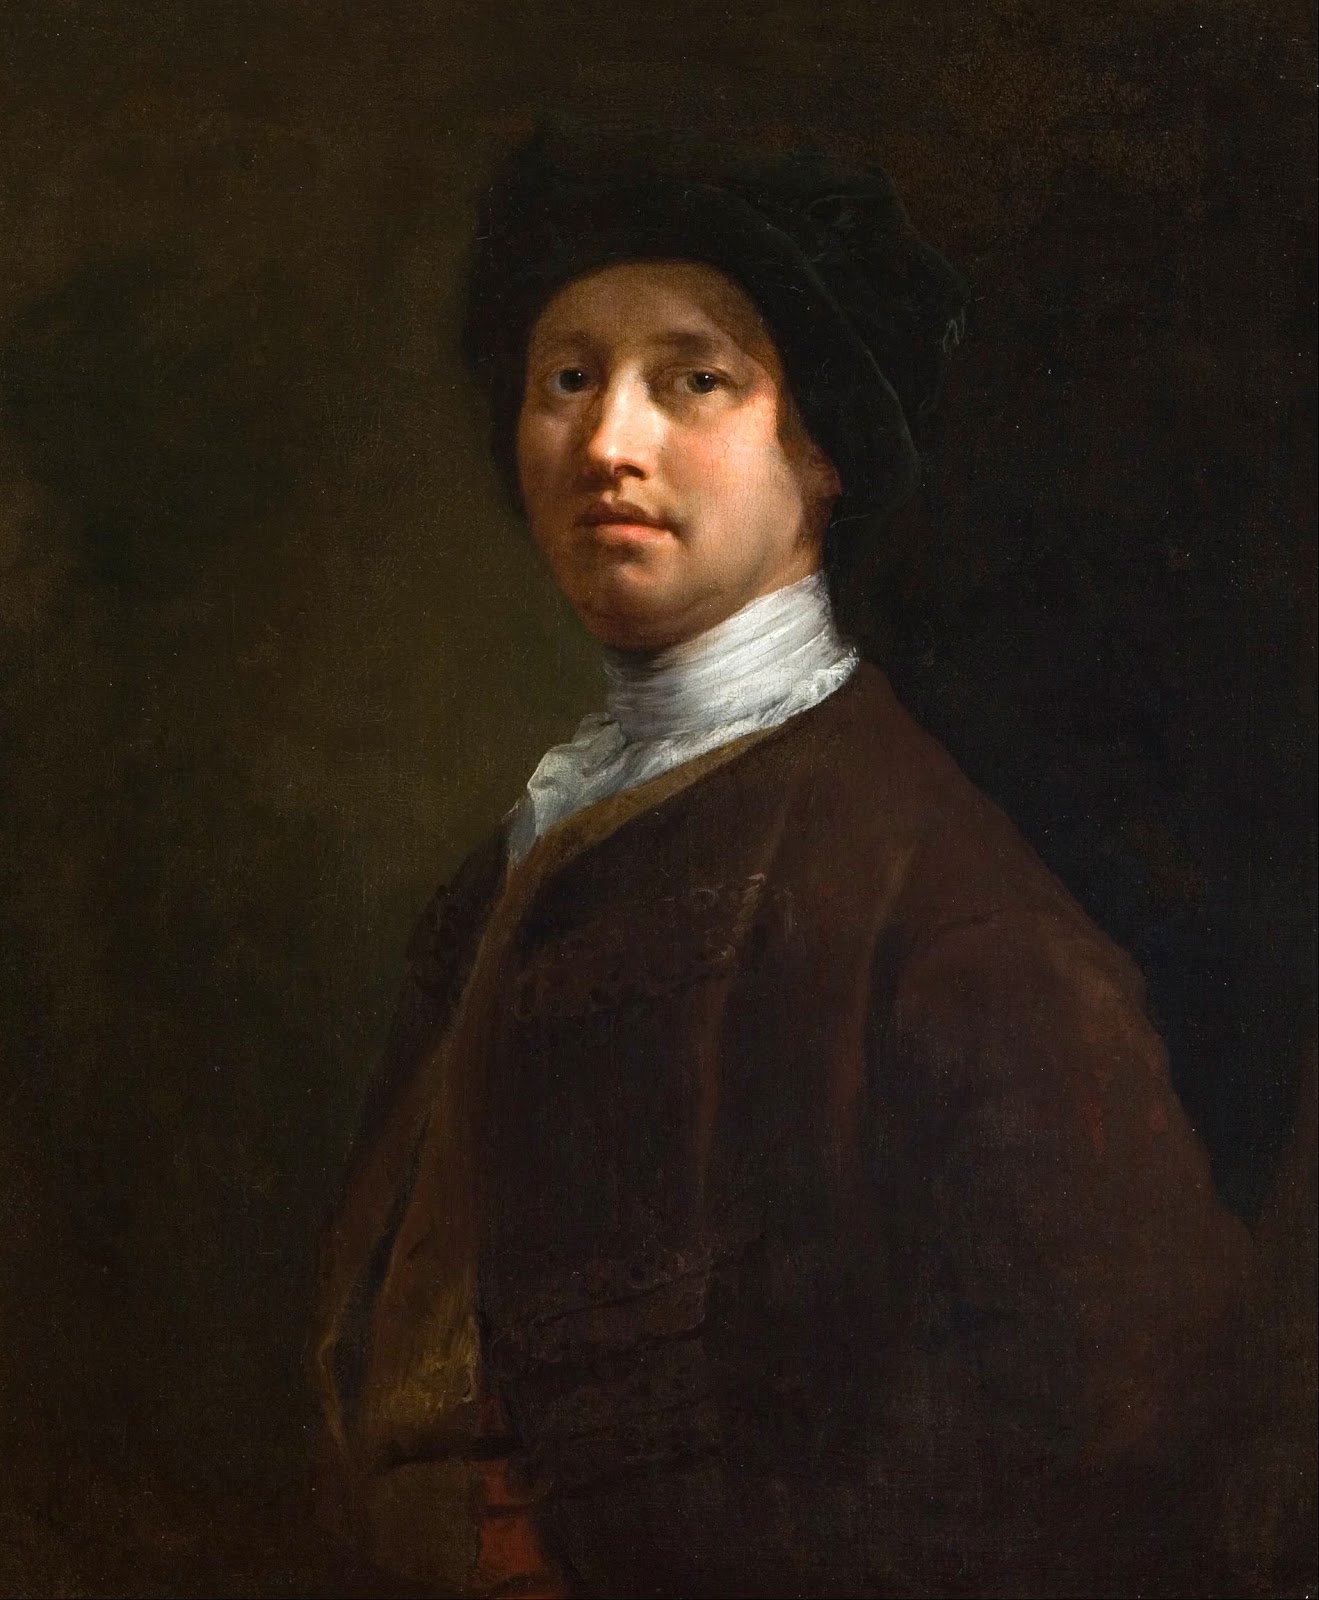 Joshua+Reynolds-1723-1792 (141).jpg